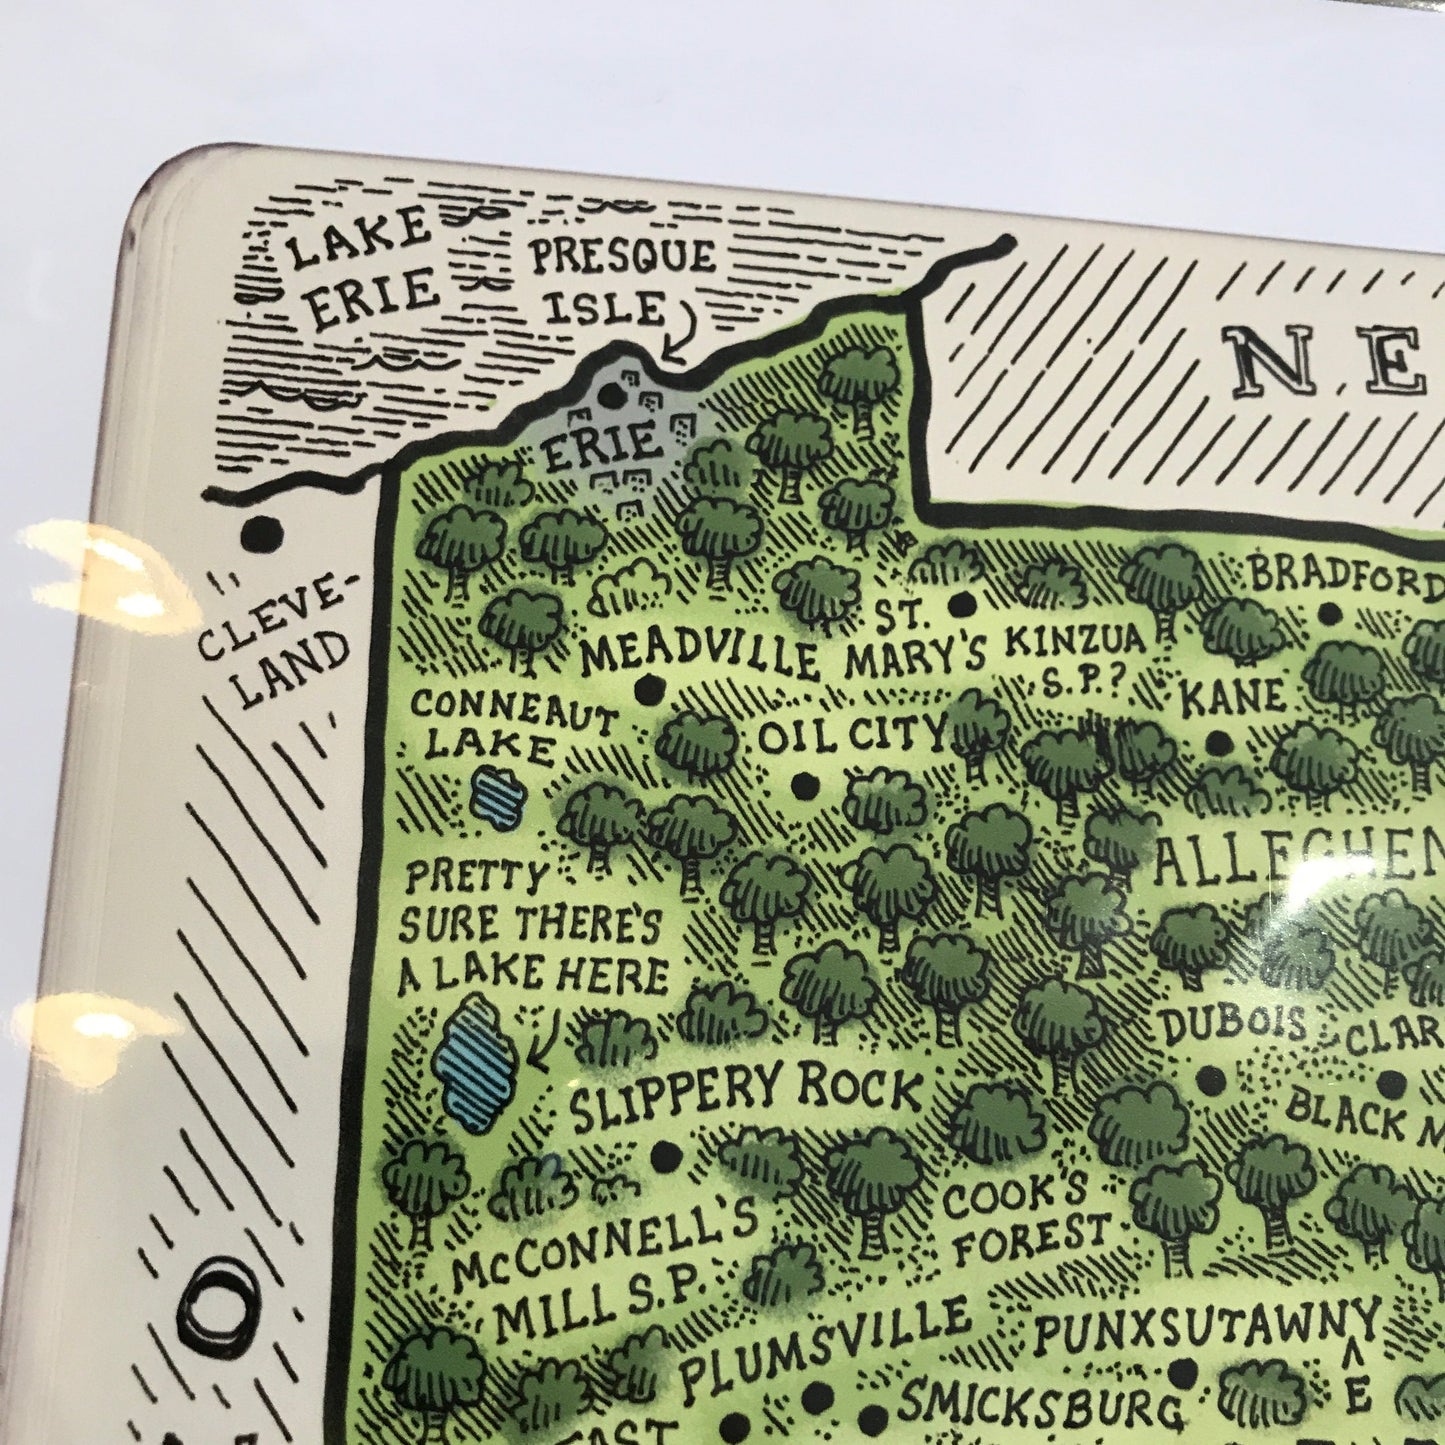 Pennsylvania Memory Map